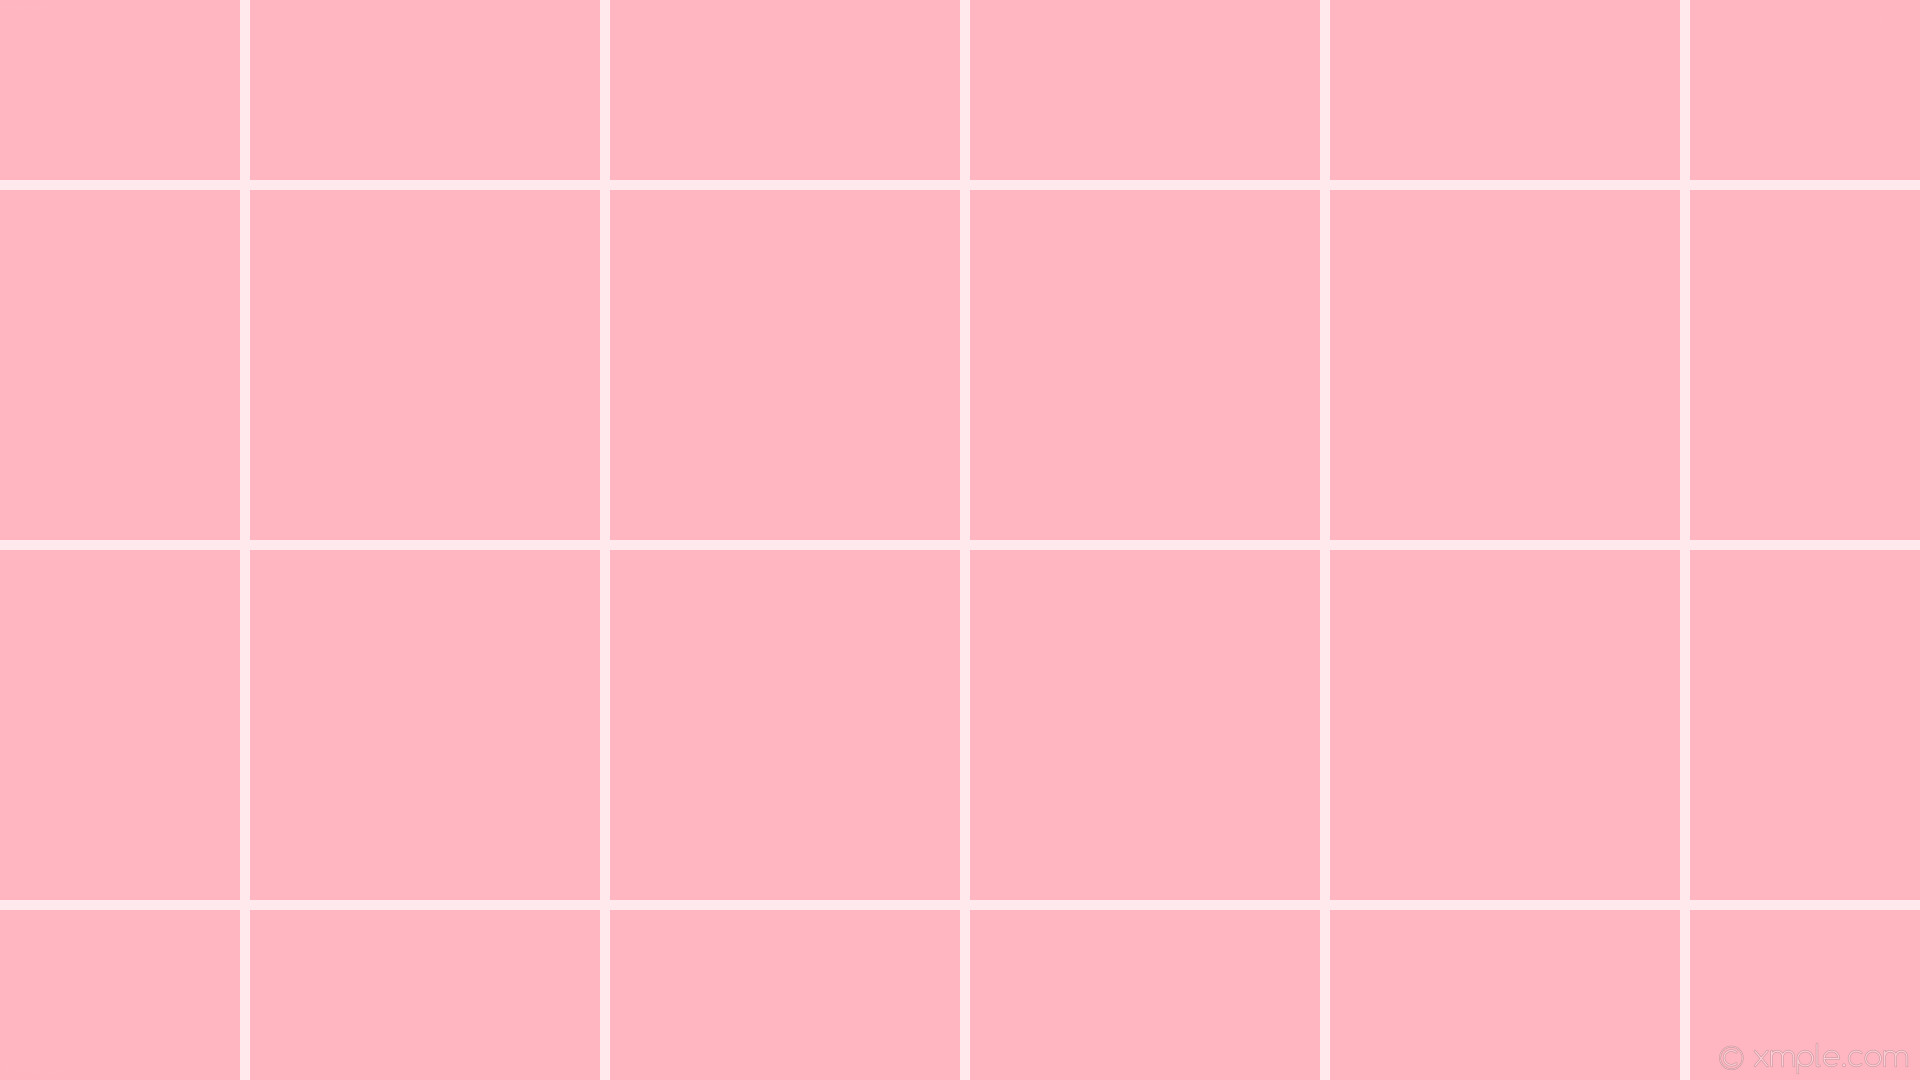 146521 Plain Pink Background Images Stock Photos  Vectors  Shutterstock